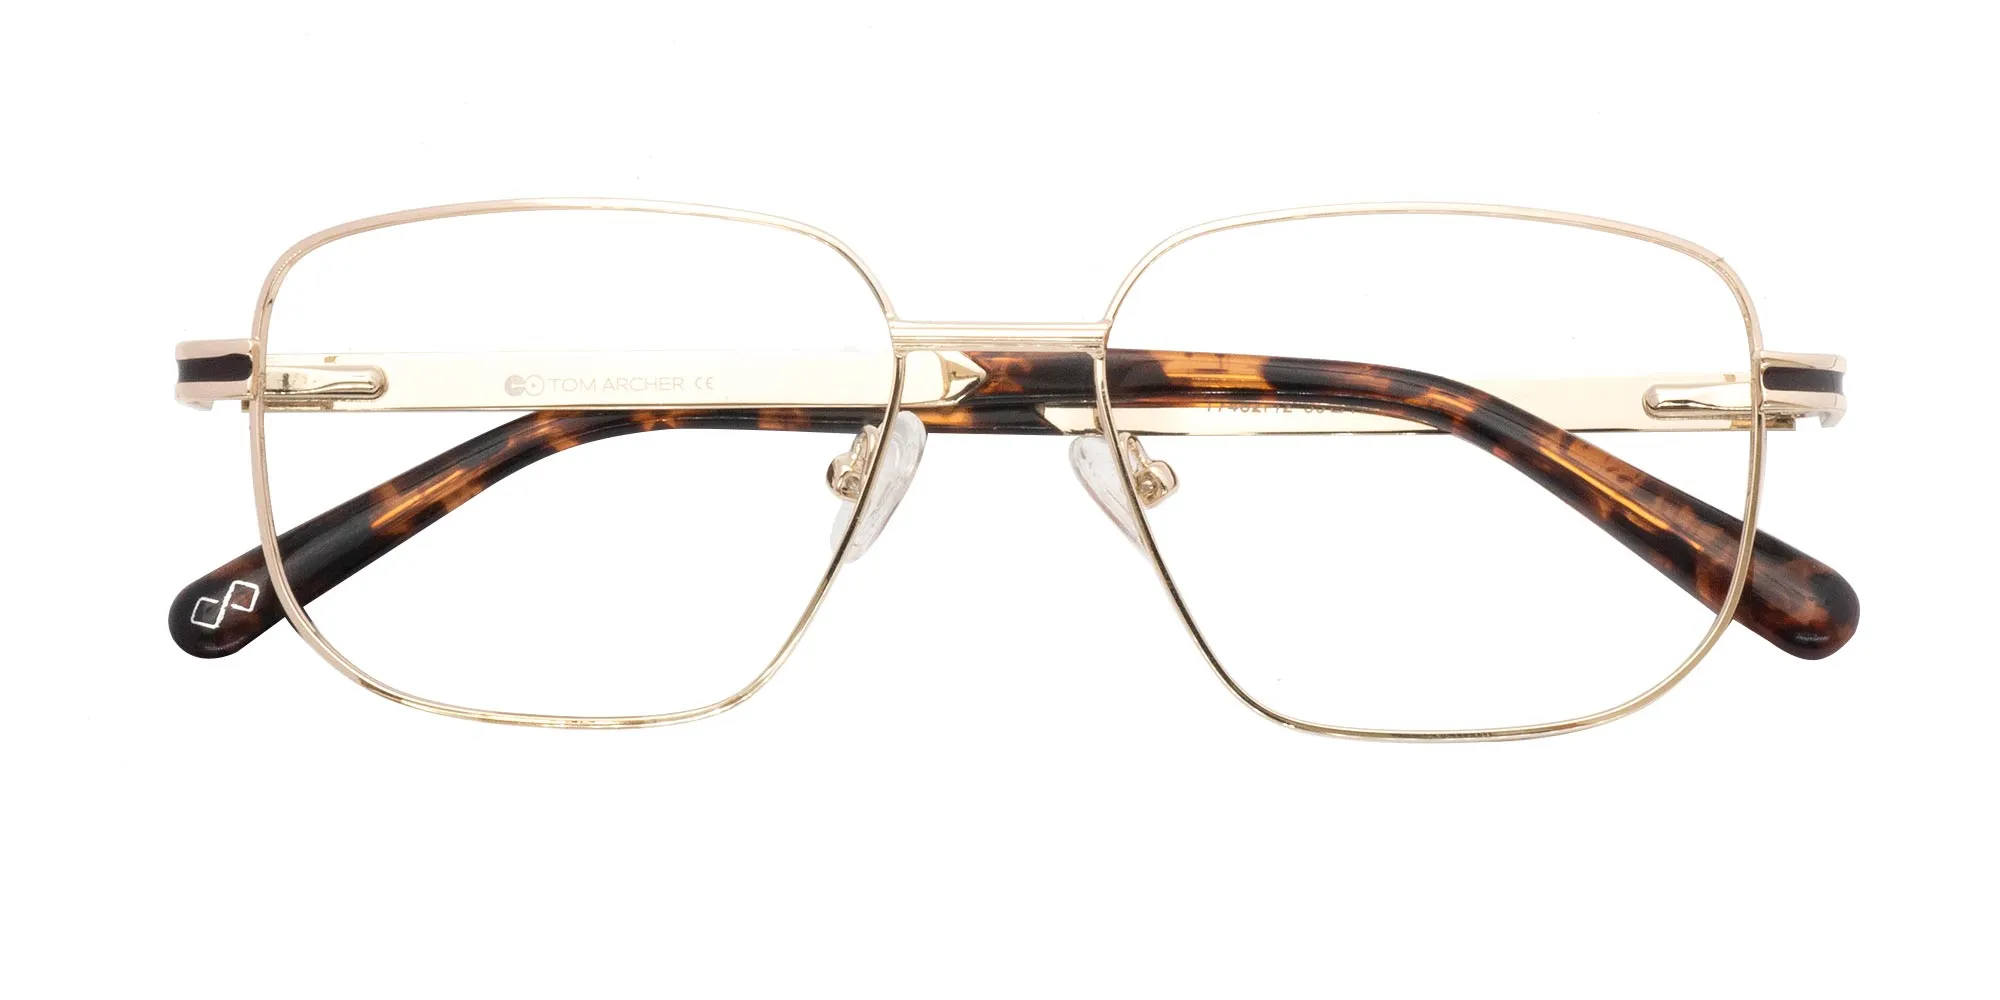 Square Gold Metal Frame Glasses-2